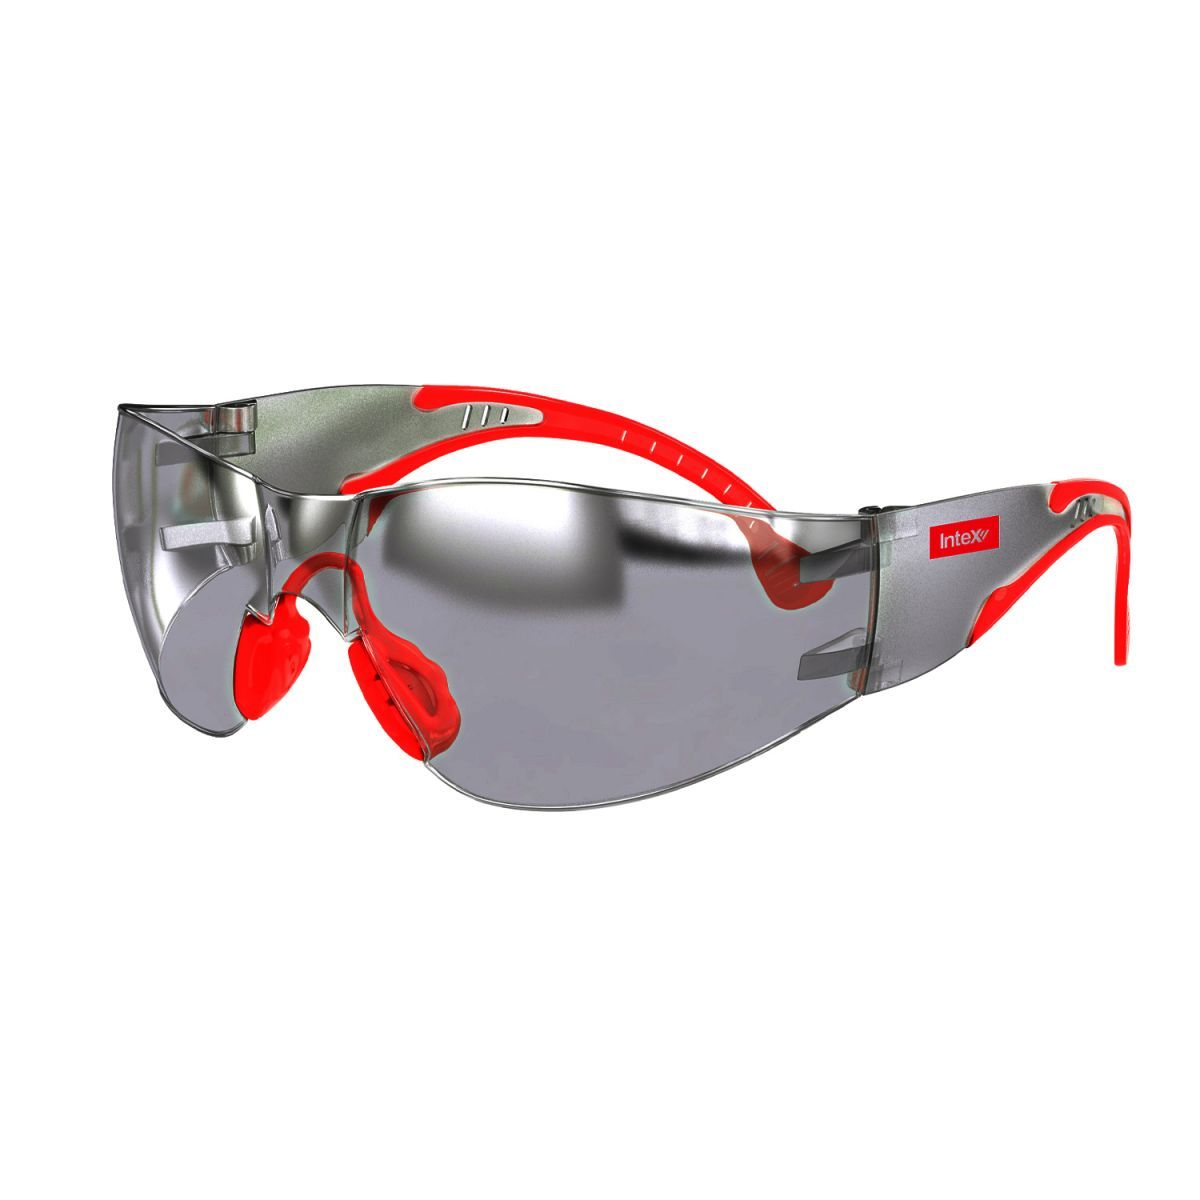 Intex ProtecX Smoke Vision Safety Glasses